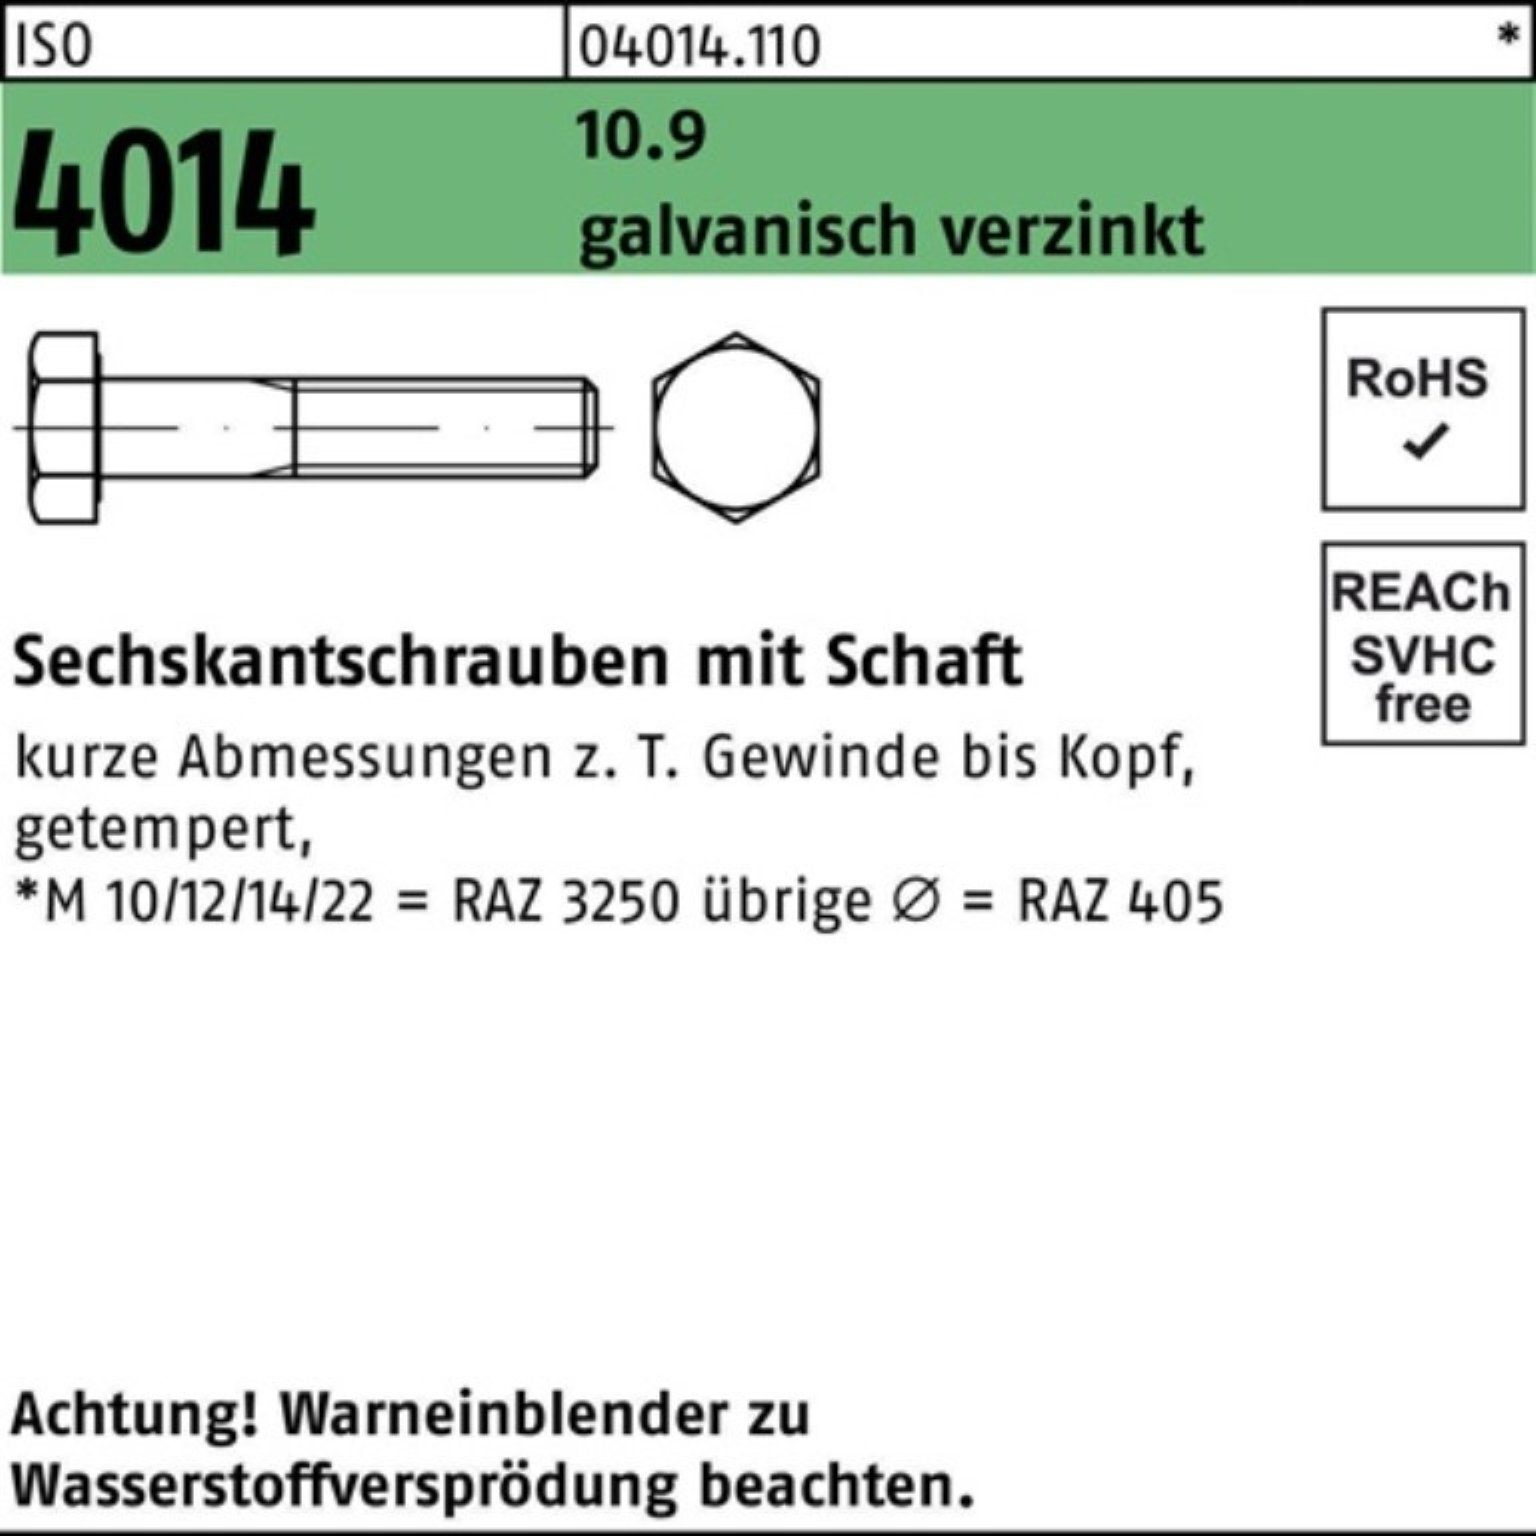 Bufab Sechskantschraube 100er Pack Sechskantschraube ISO 4014 Schaft M18x 100 10.9 galv.verz. | Schrauben